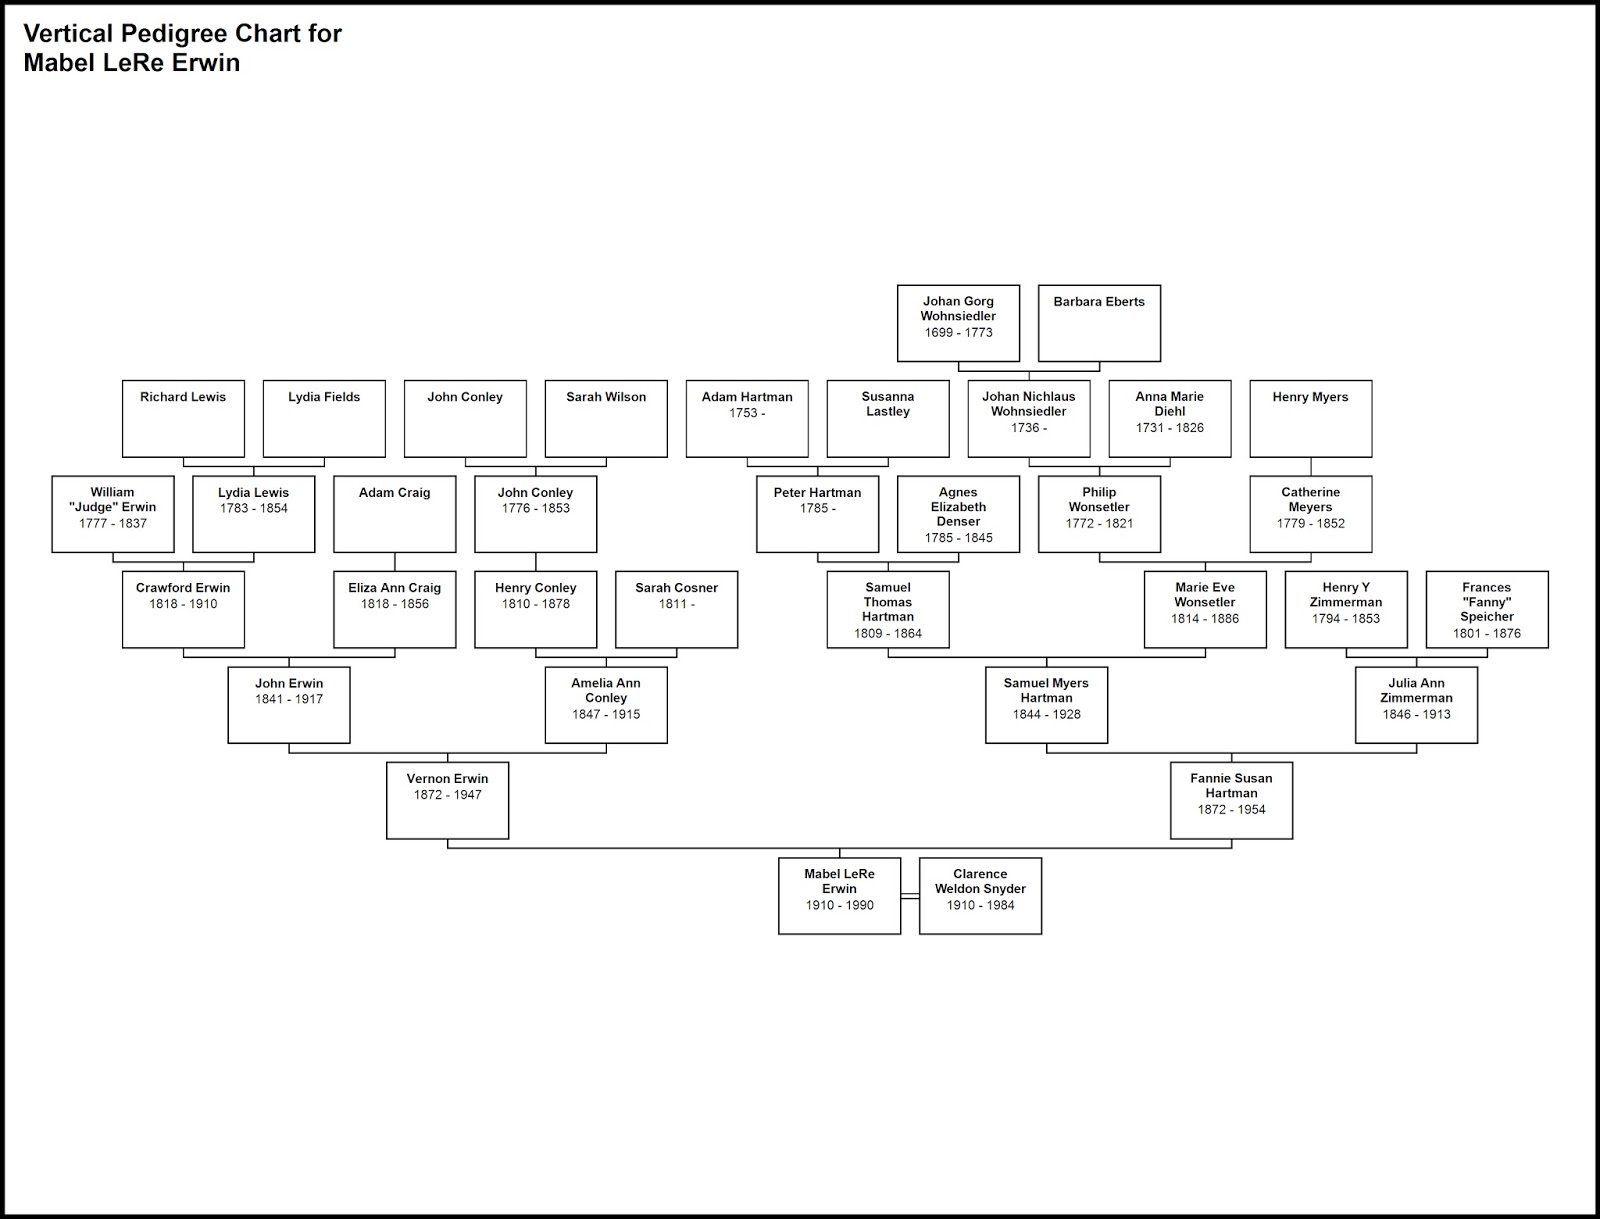 Vertical Pedigree Chart